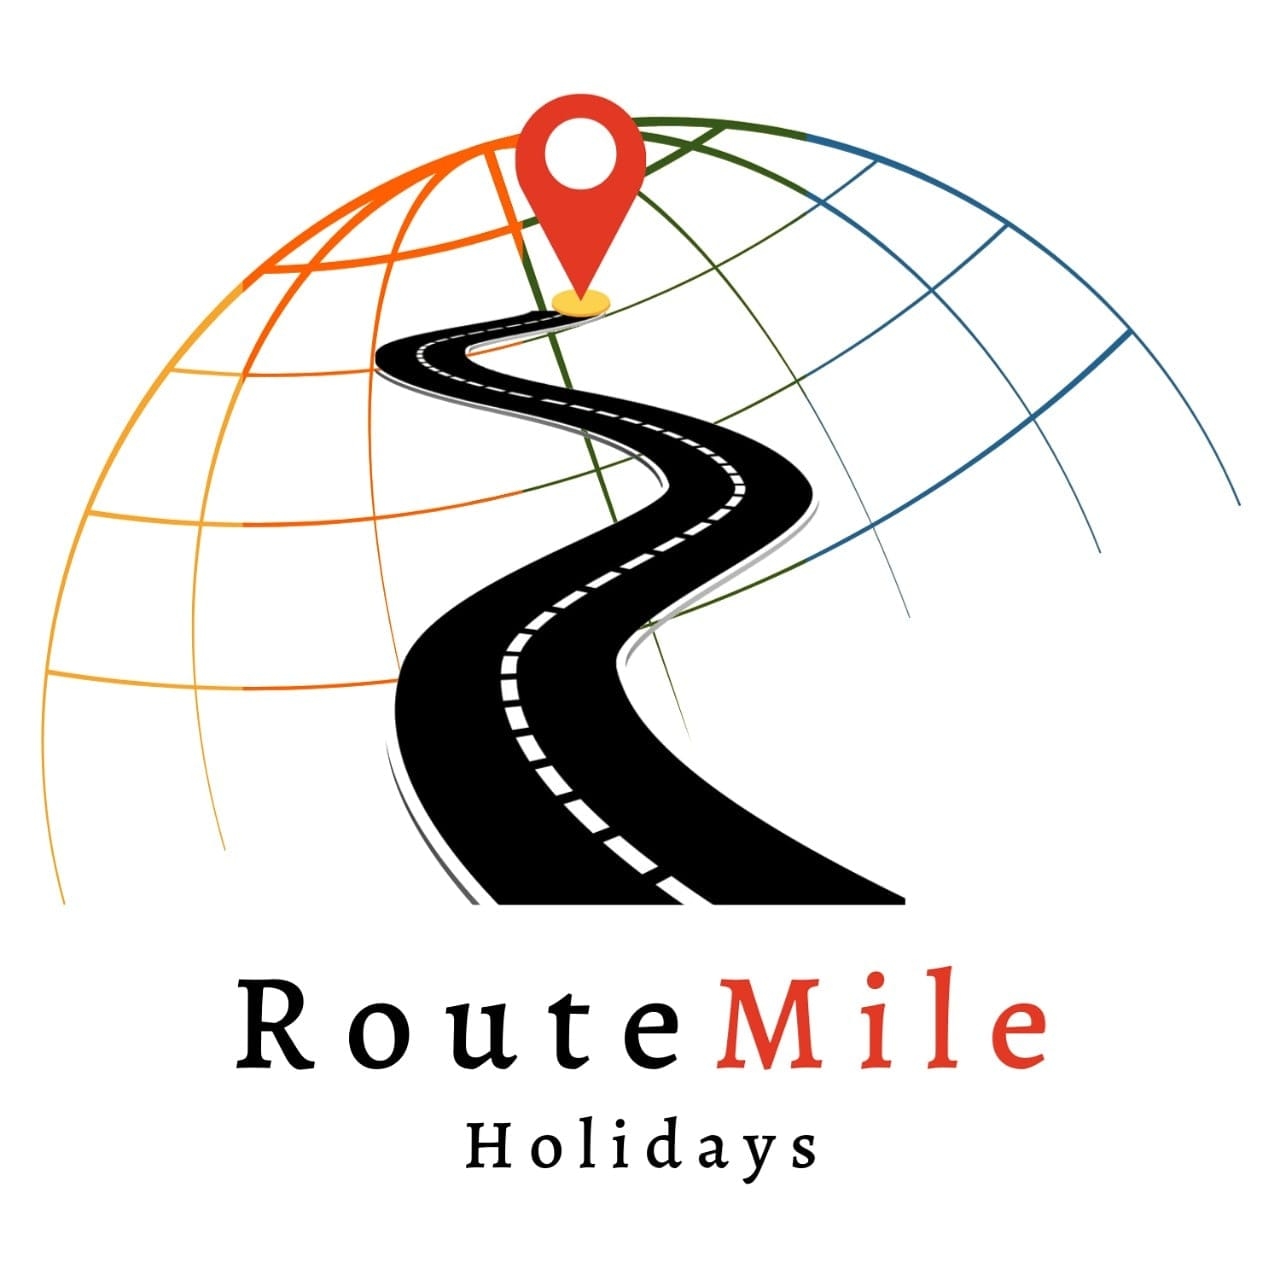 Routemile Holidays